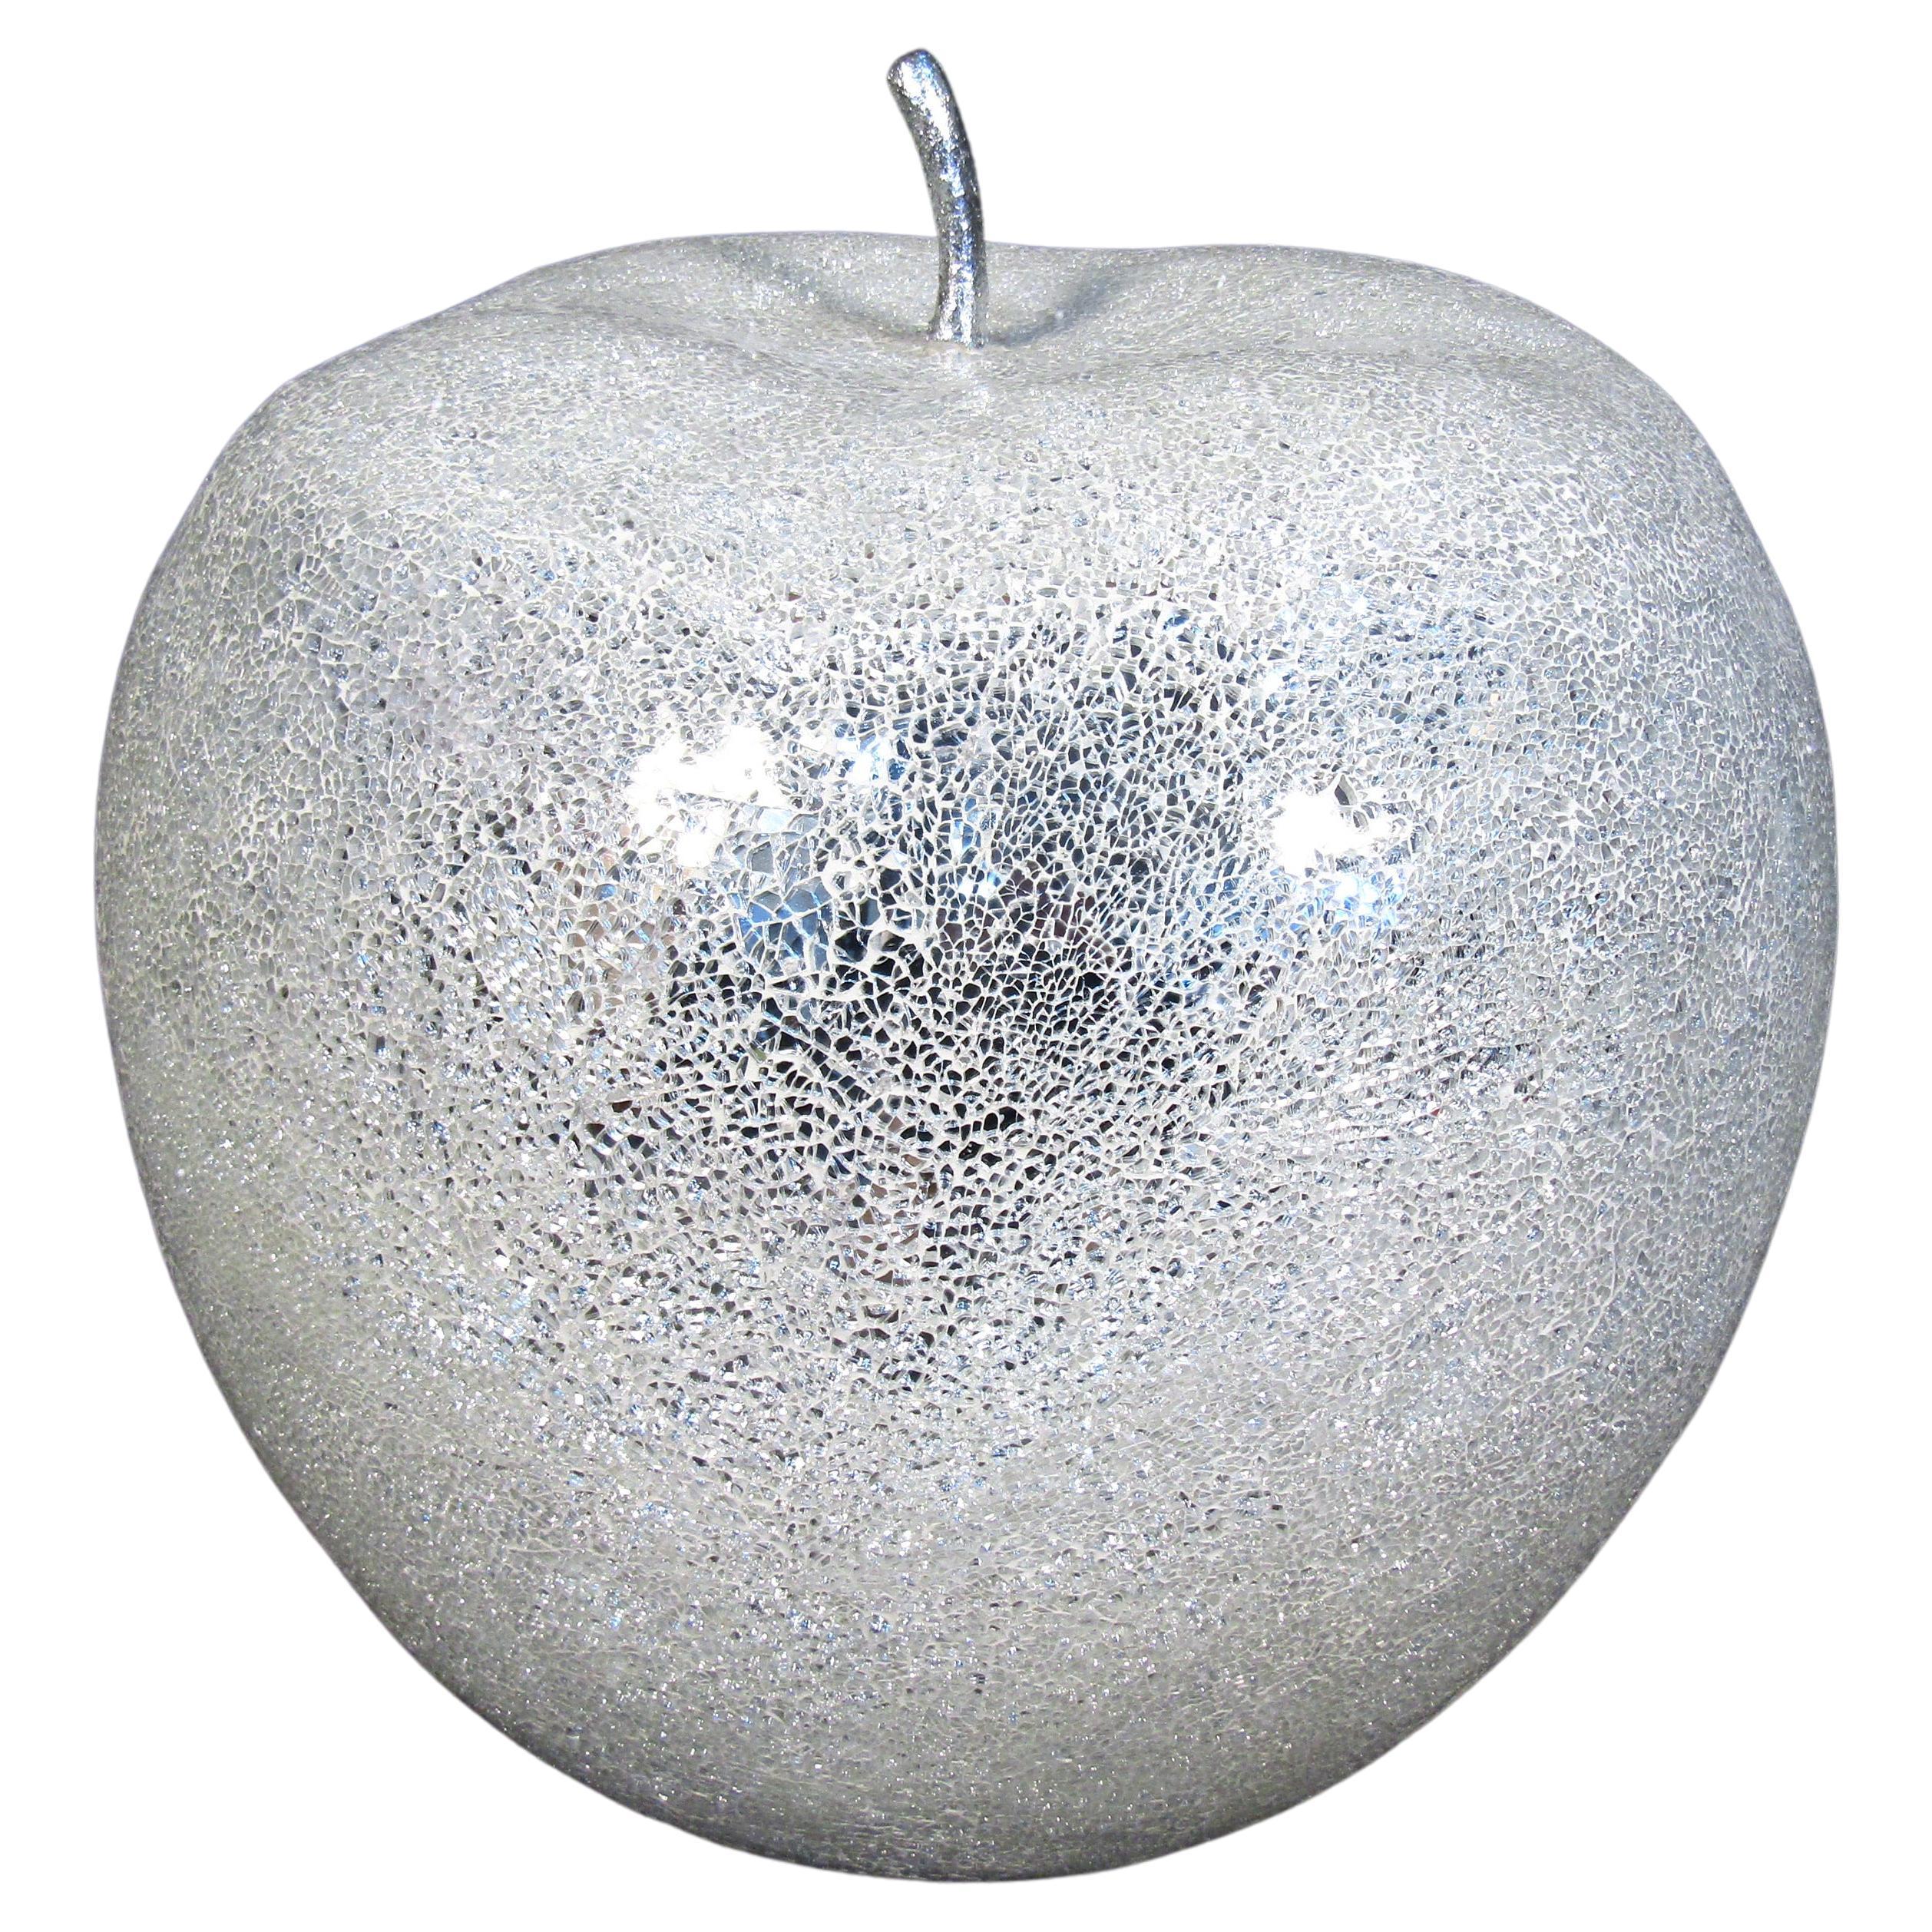 Unique Cracked Glass Apple